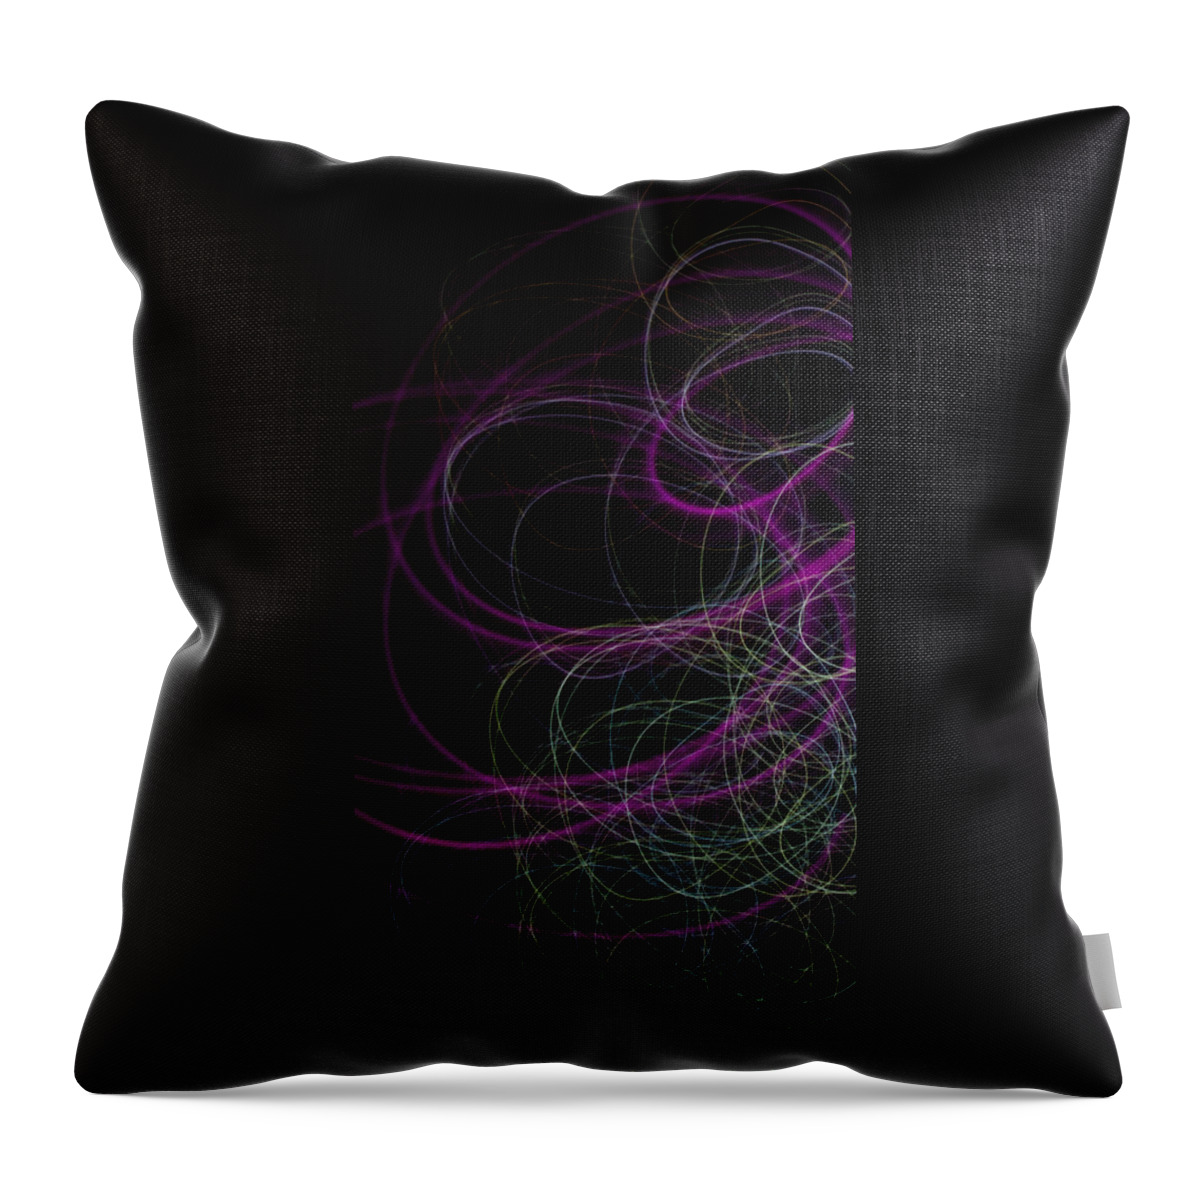 Light Throw Pillow featuring the photograph Purple Swirls by Cherie Duran